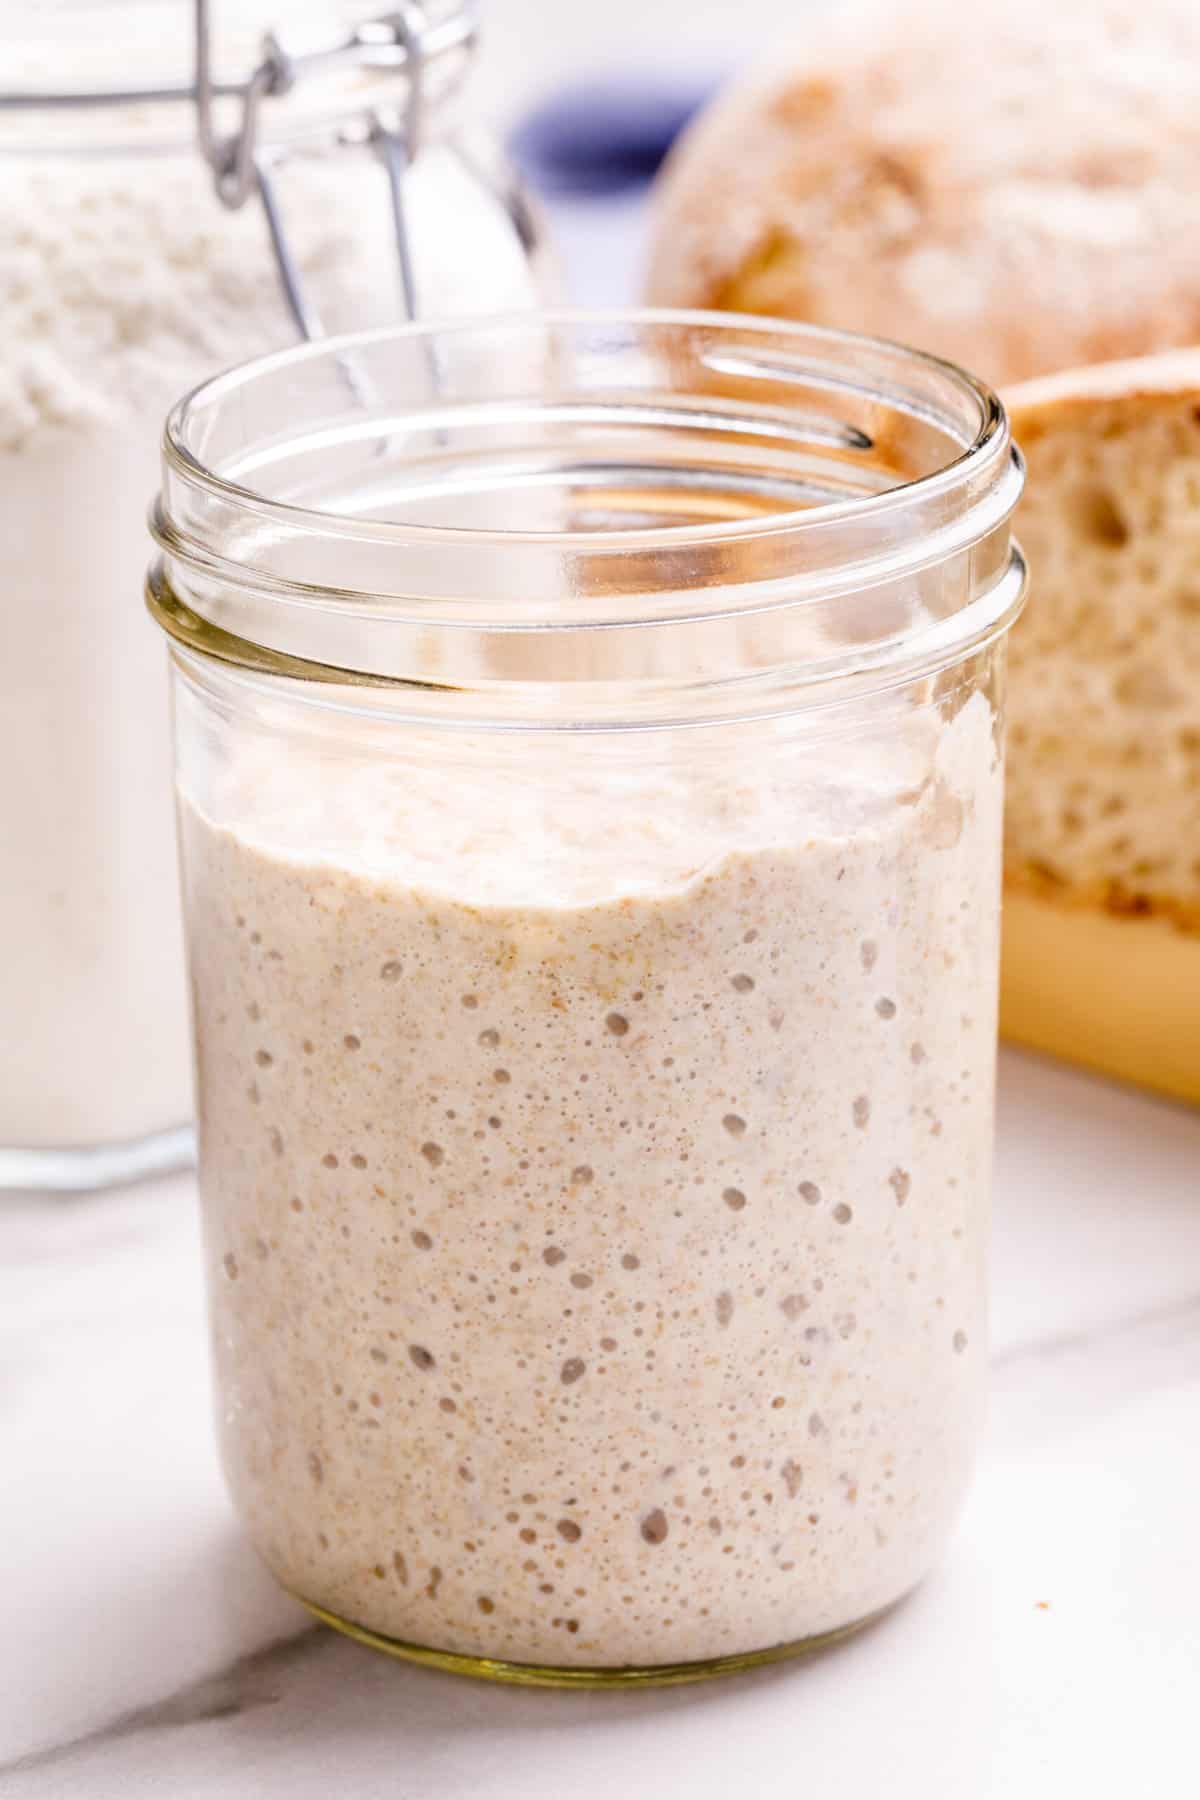 close up image of sourdough starter in a glass jar